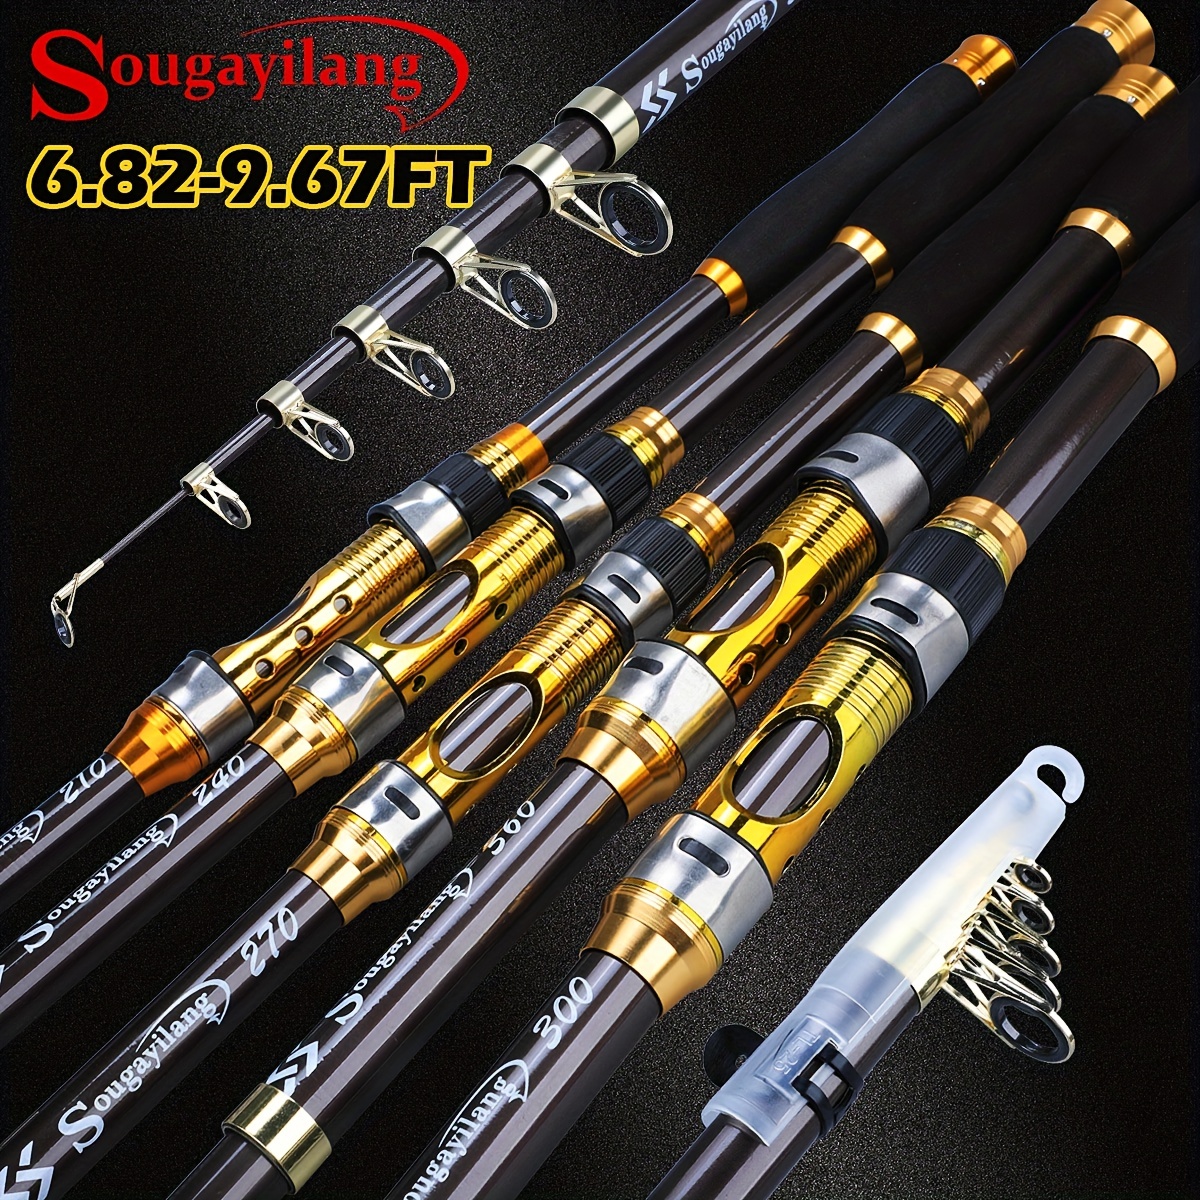 Sougayilang 4 Sections Fishing Rod Ultralight Carbon Rod - Temu